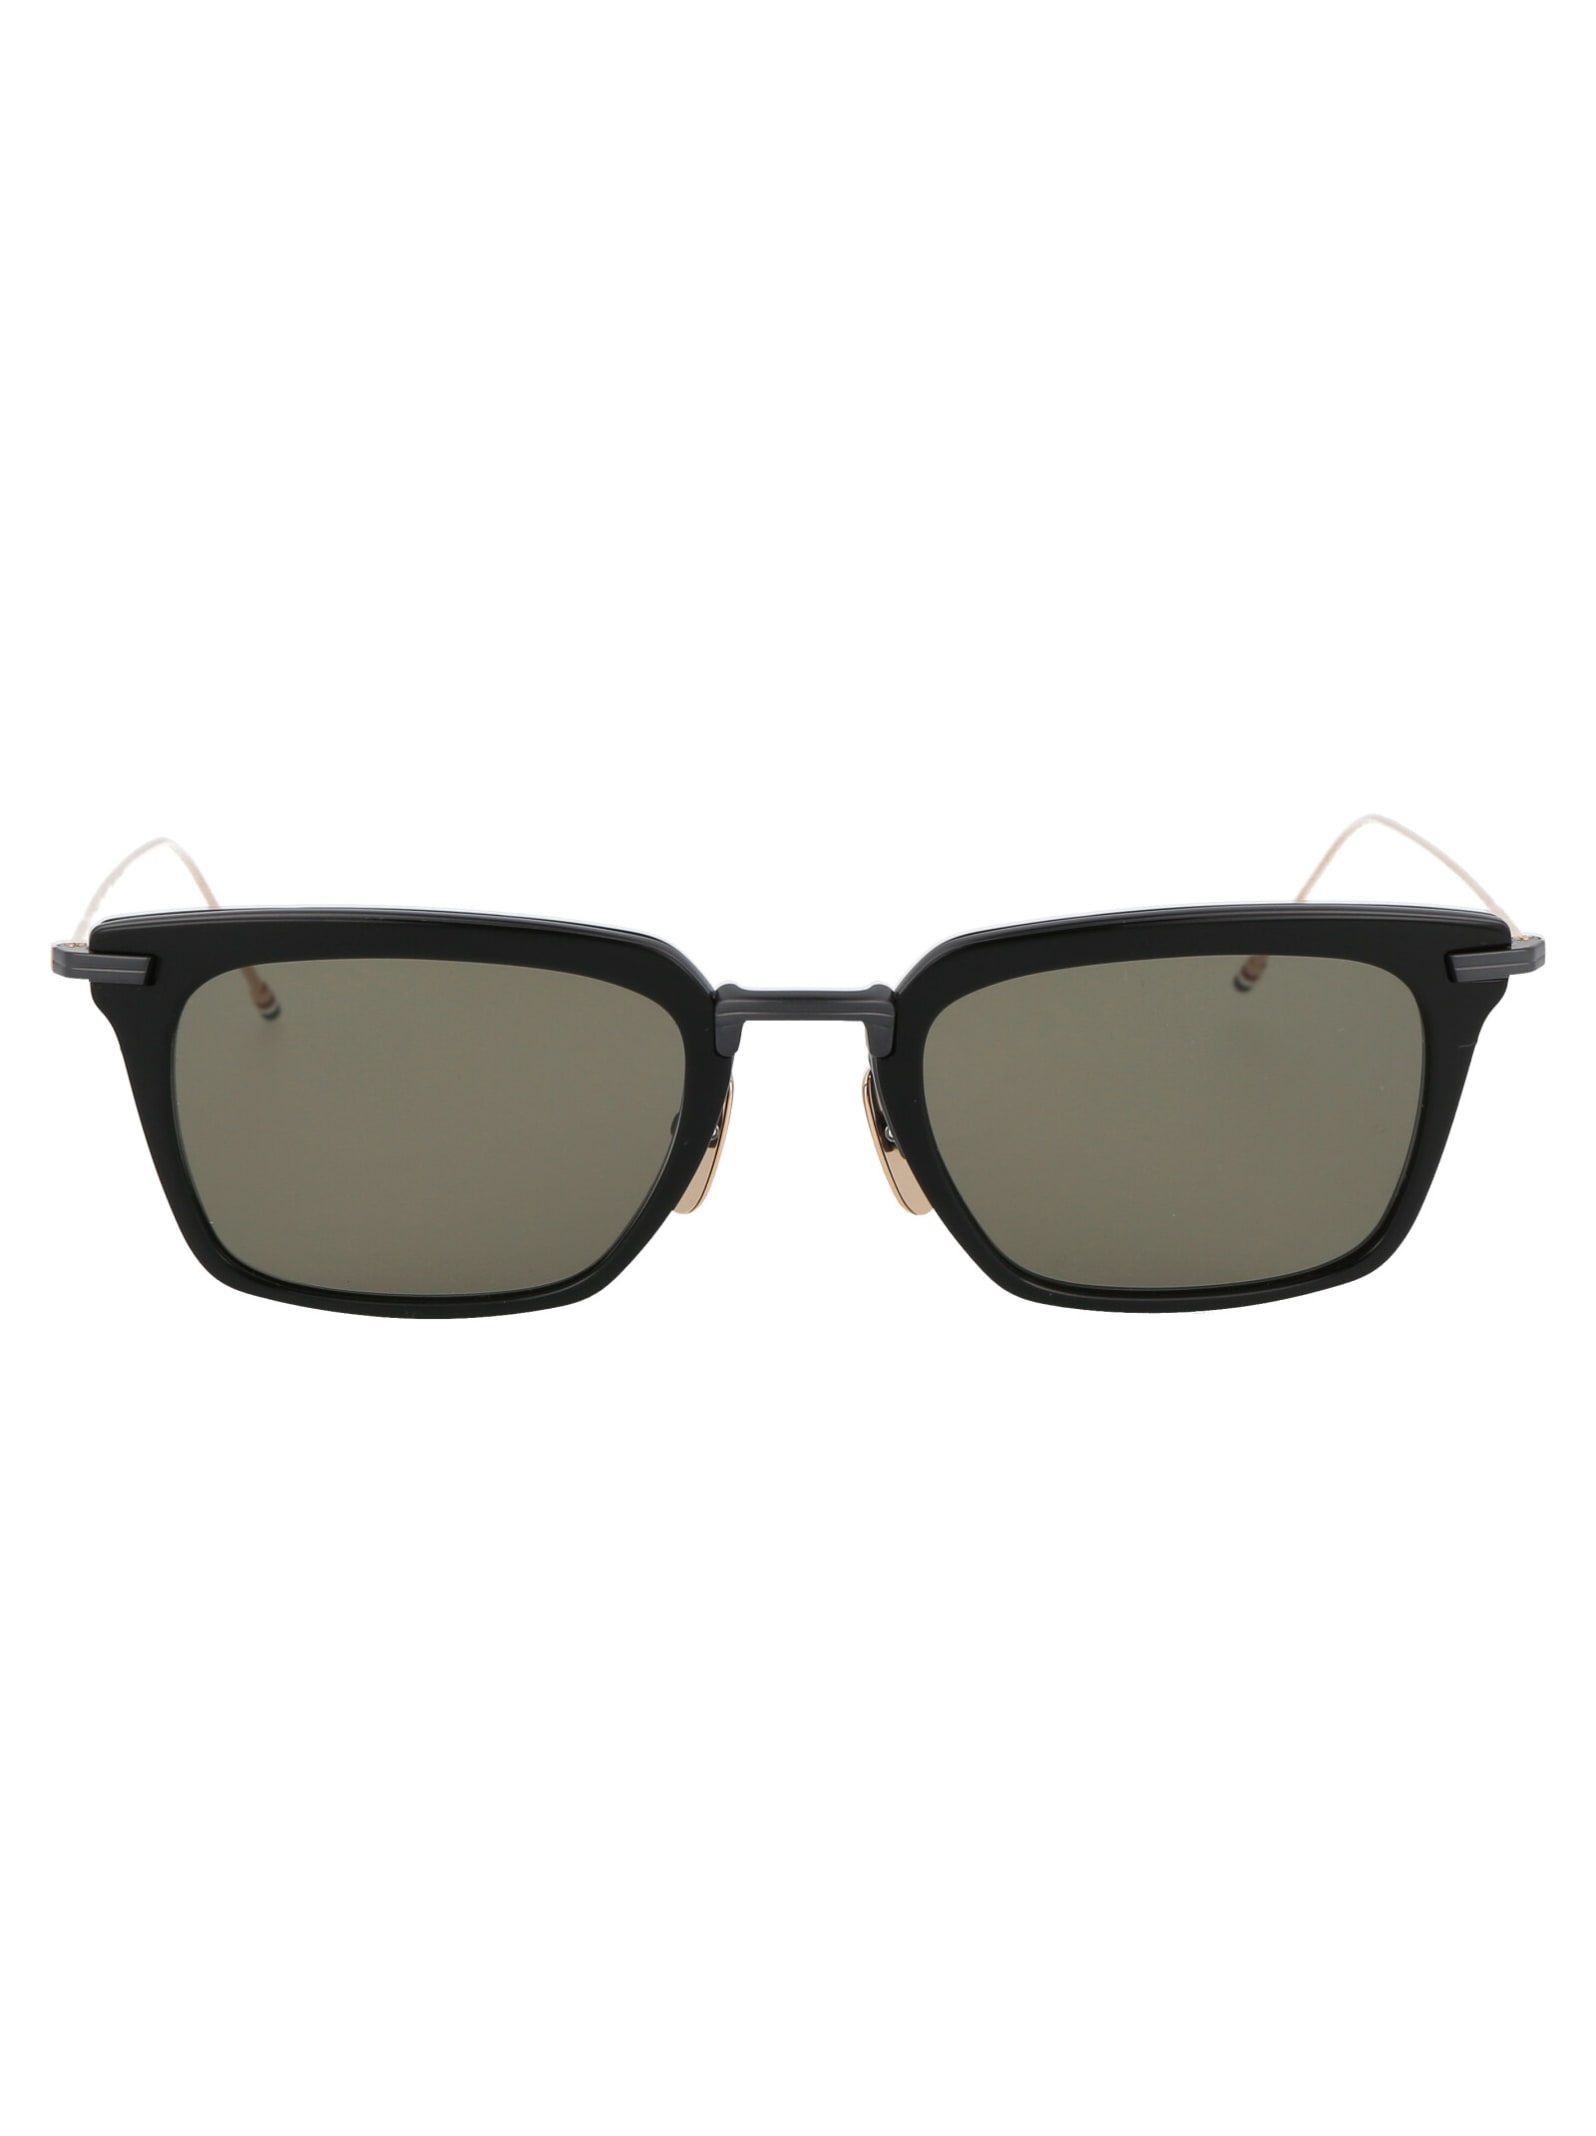 Thom Browne Tb-916 Sunglasses